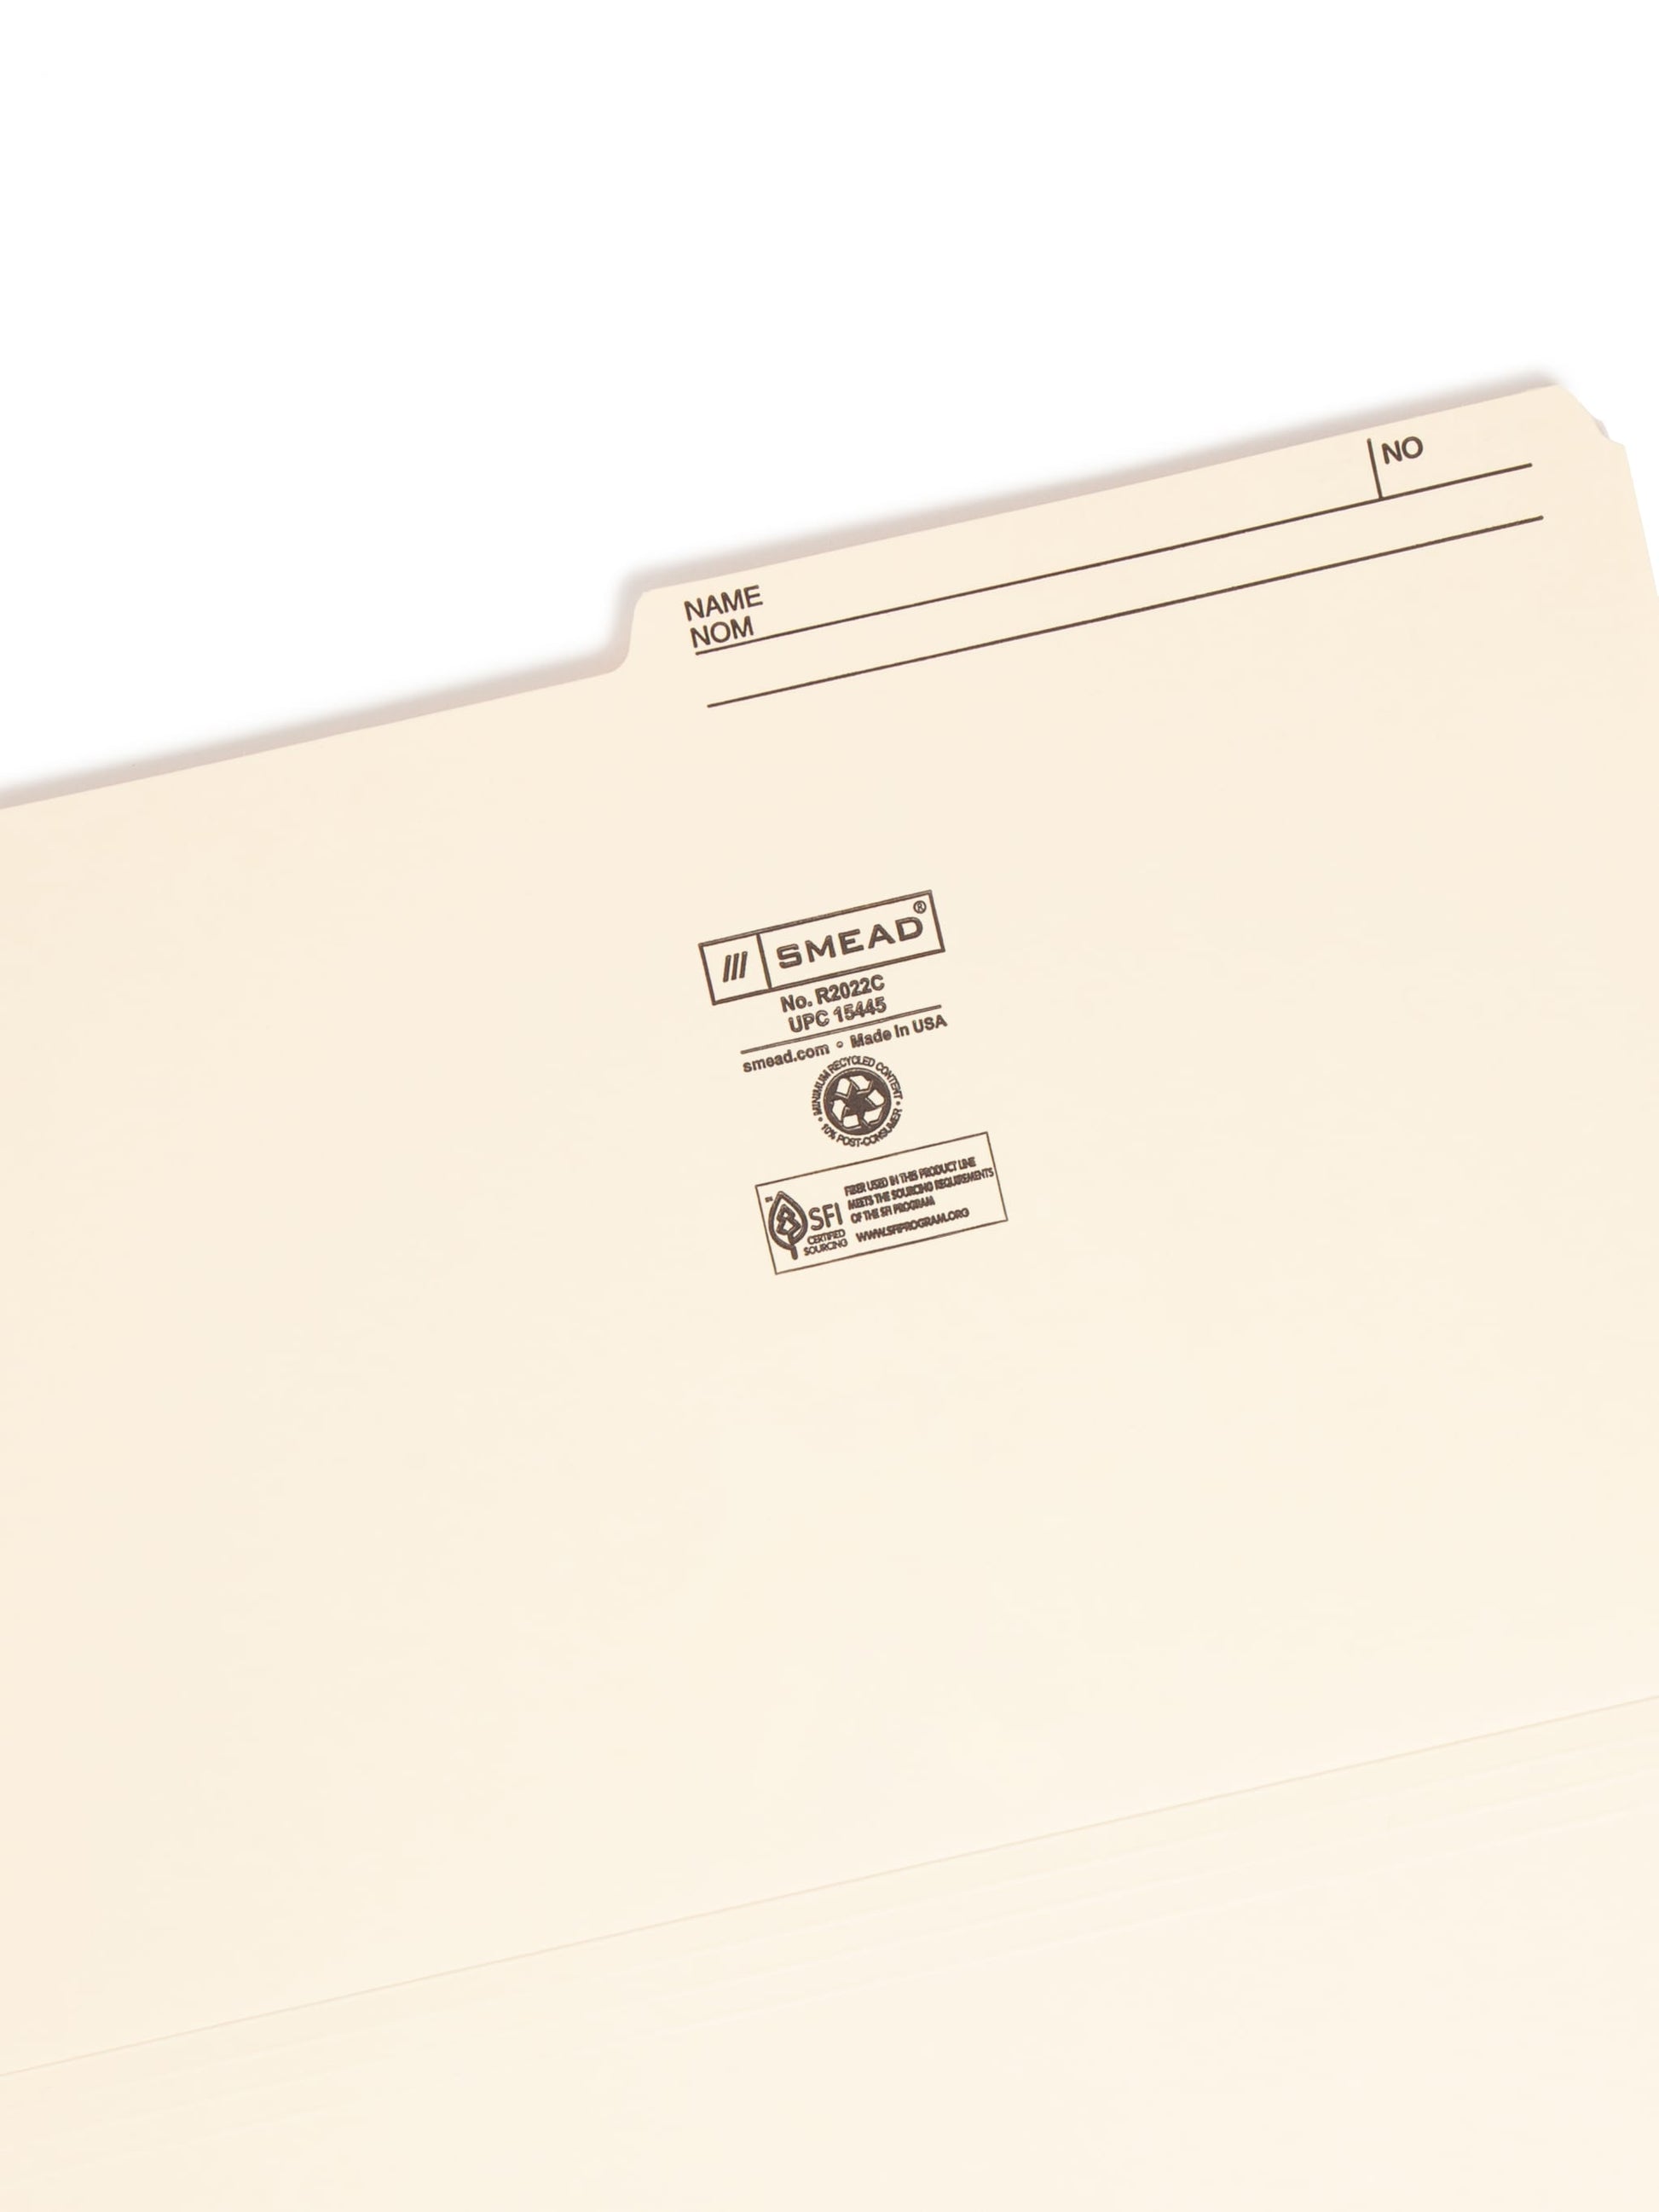 Heavyweight Reversible Printed Tab File Folders, 1/2-Cut Tab, Manila Color, Legal Size, 086486154451